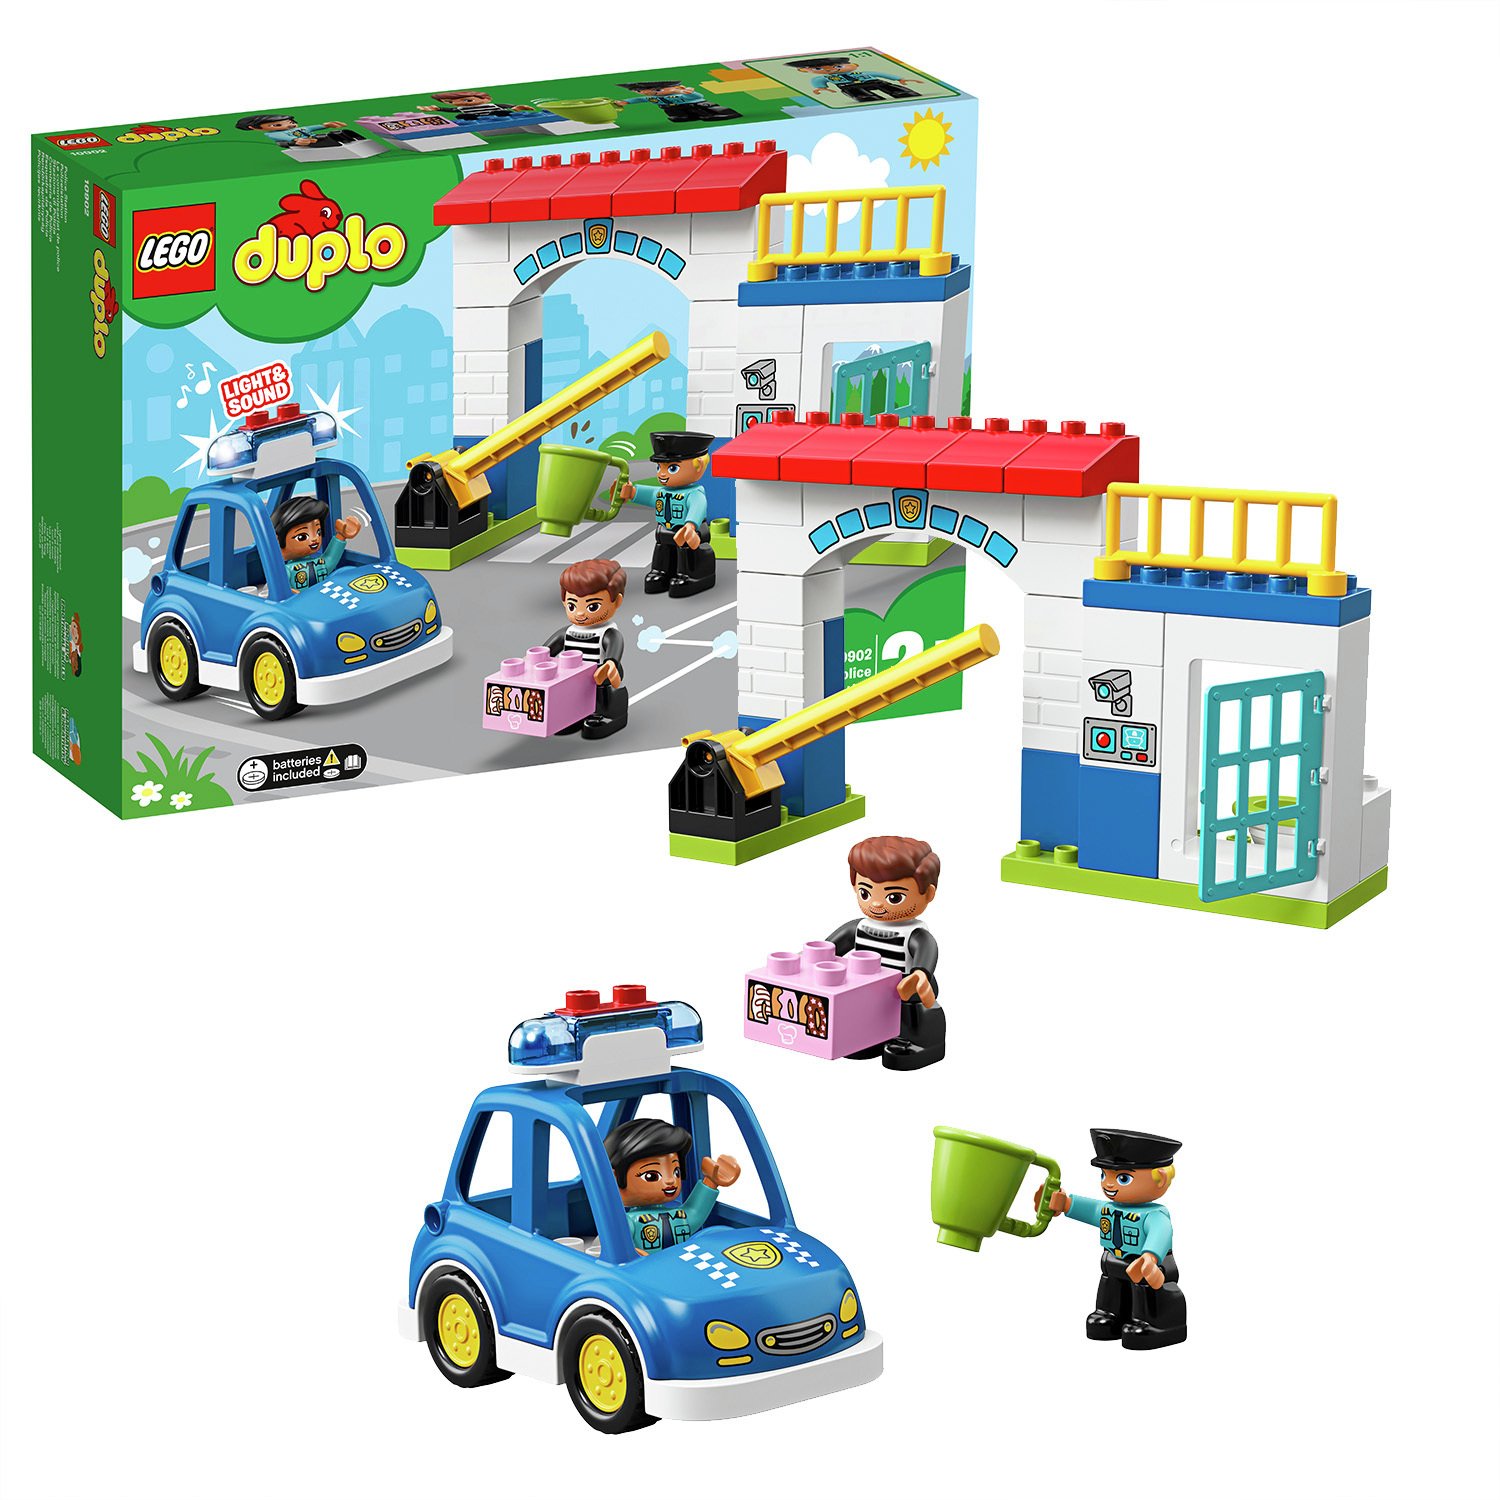 LEGO DUPLO Police Station - 10902